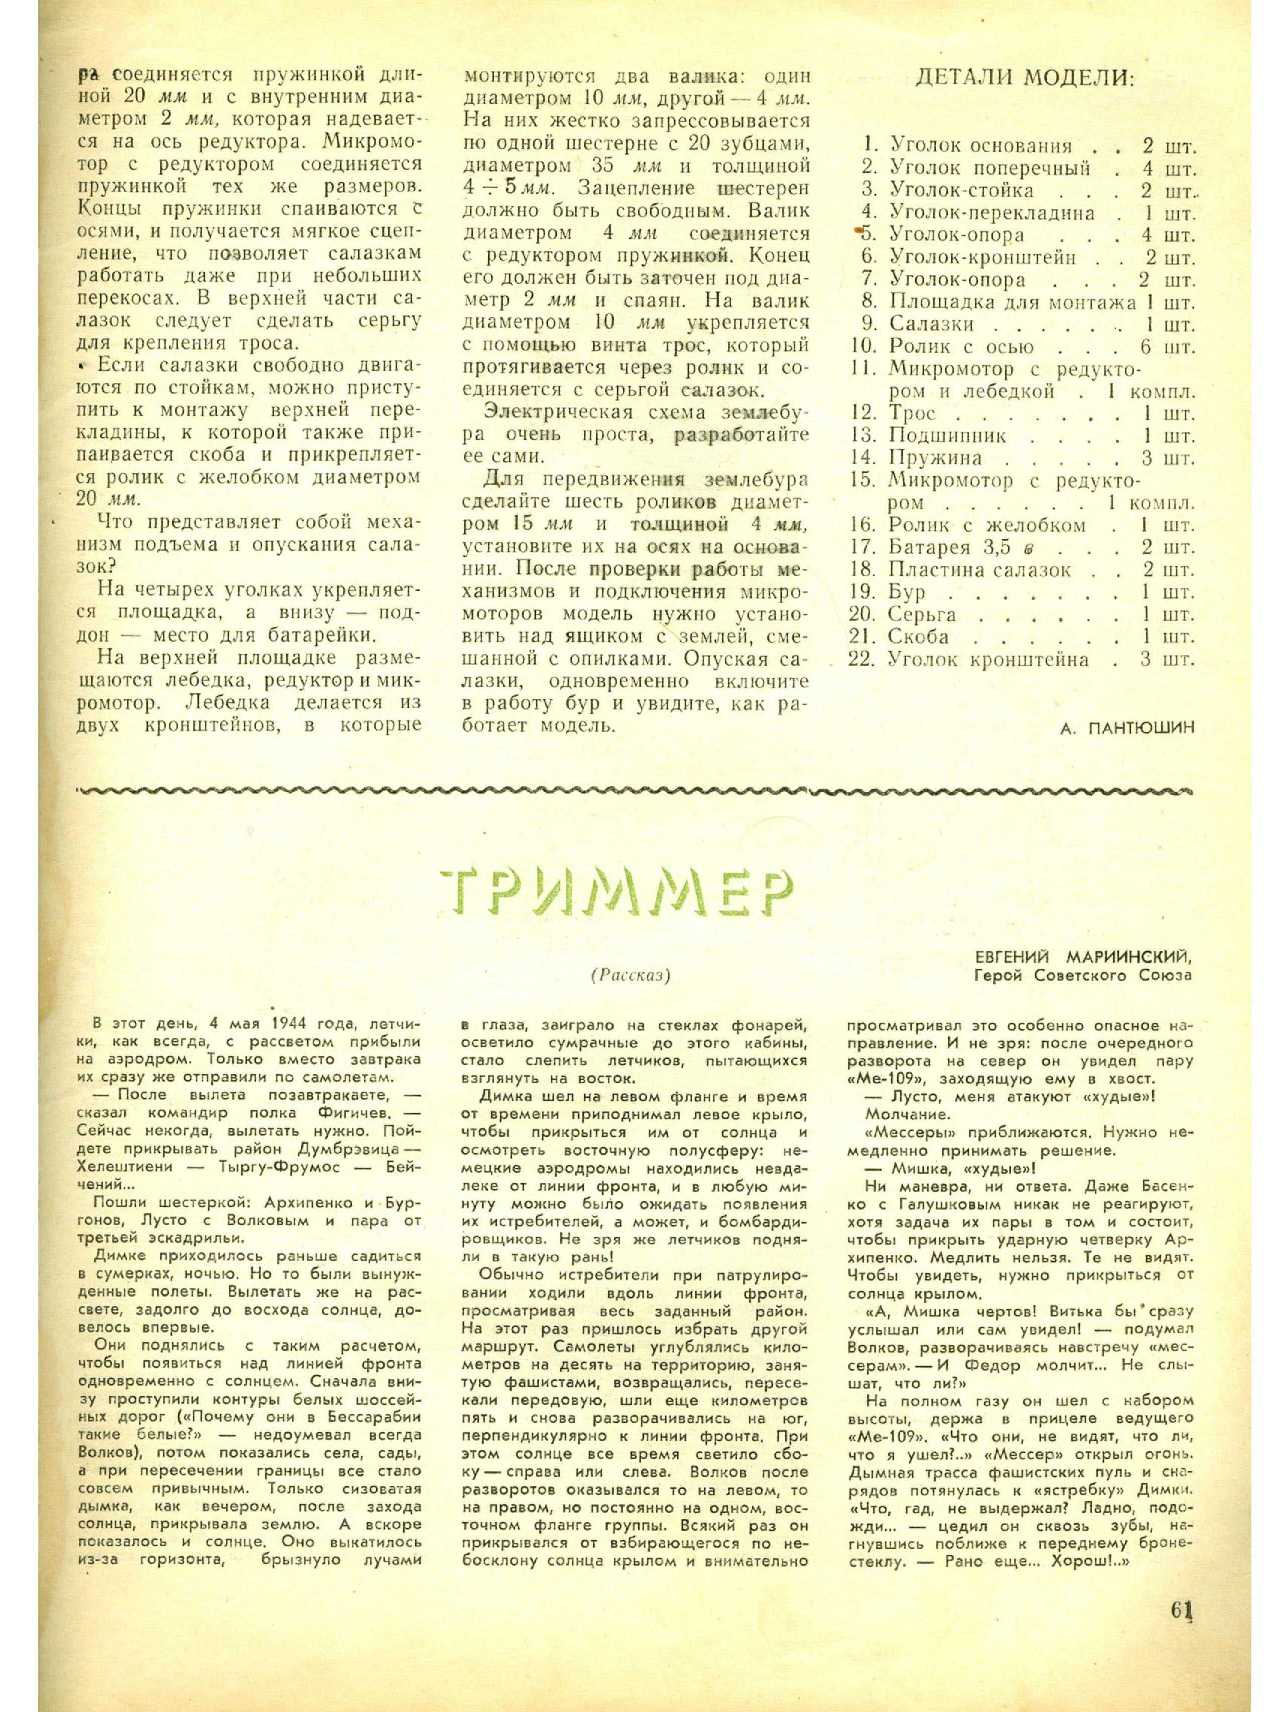 ЮМК 12, 1965, 61 c.